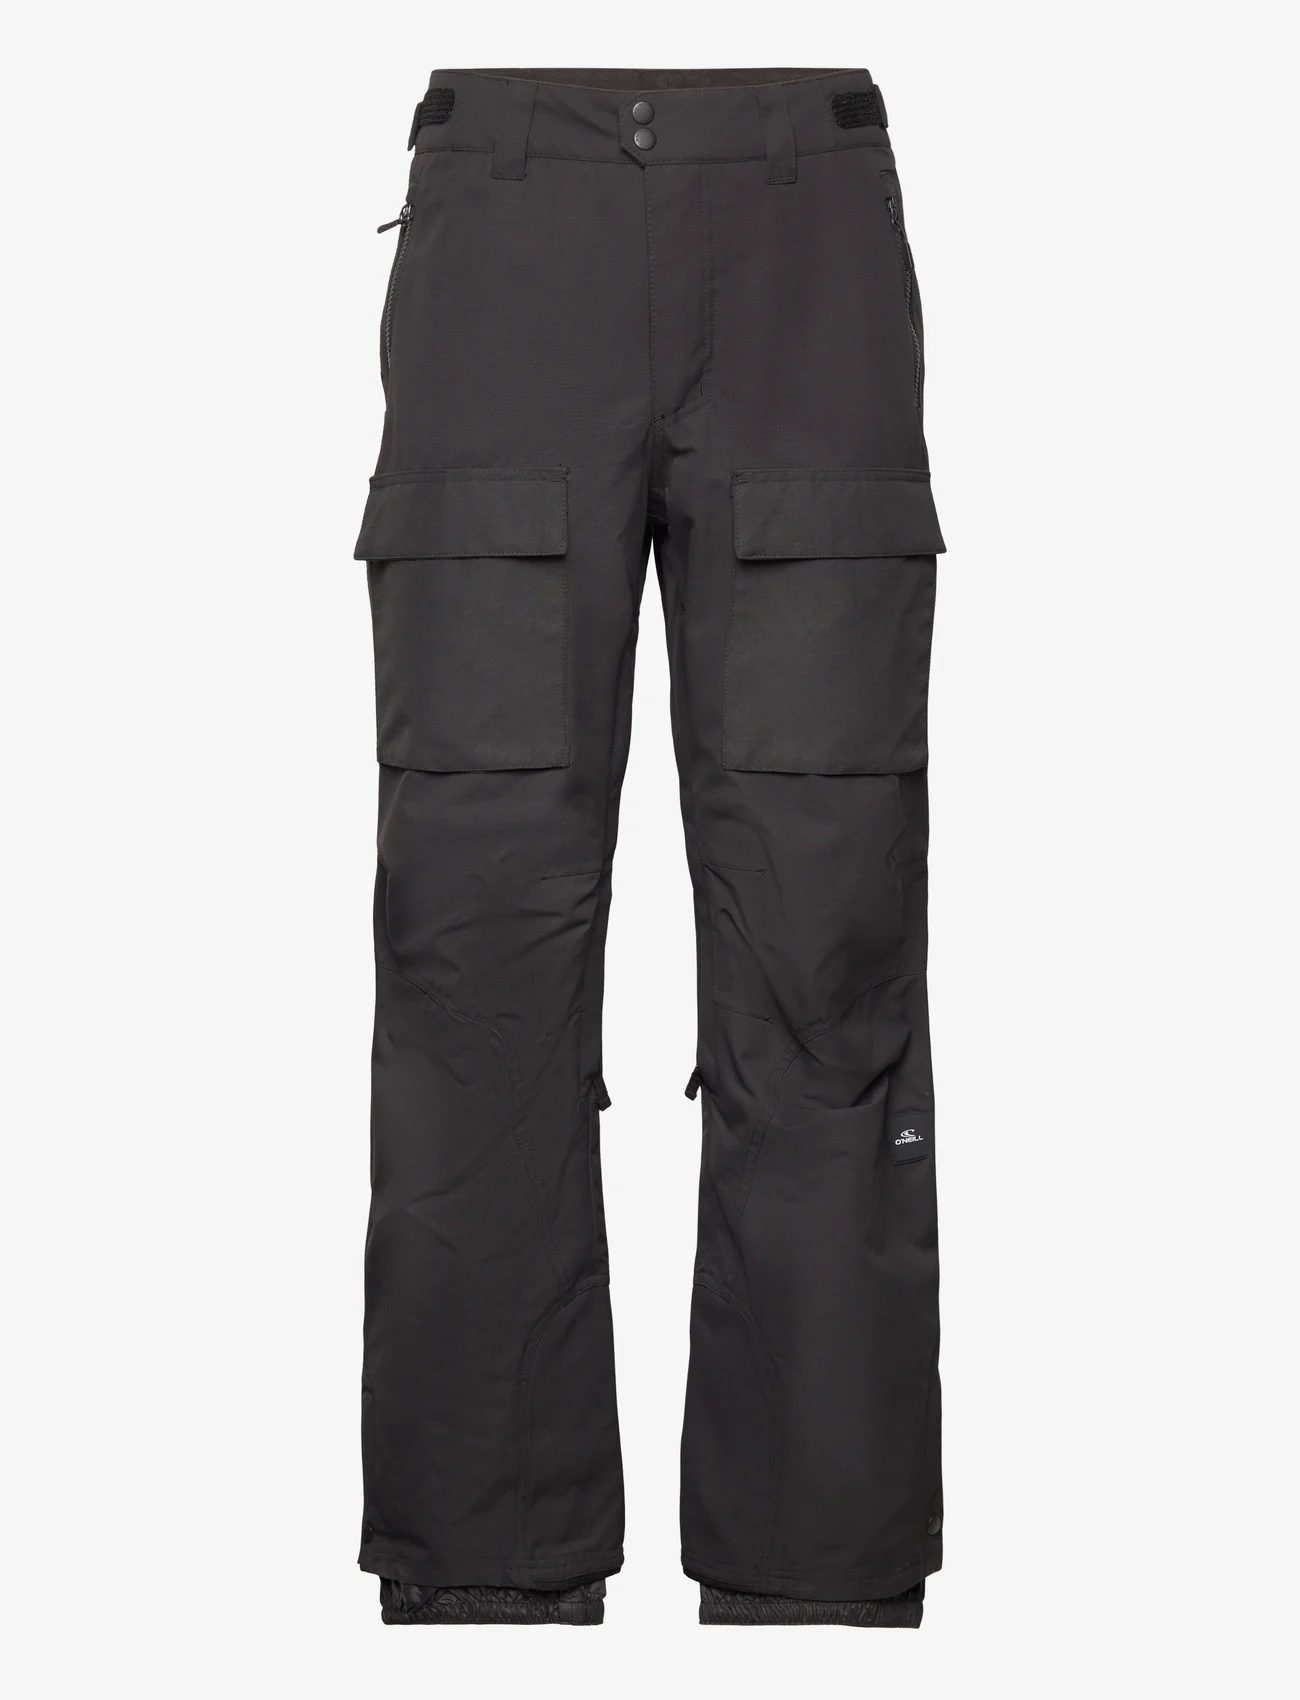 O'neill - UTILITY PANTS - skiing pants - black out - 0